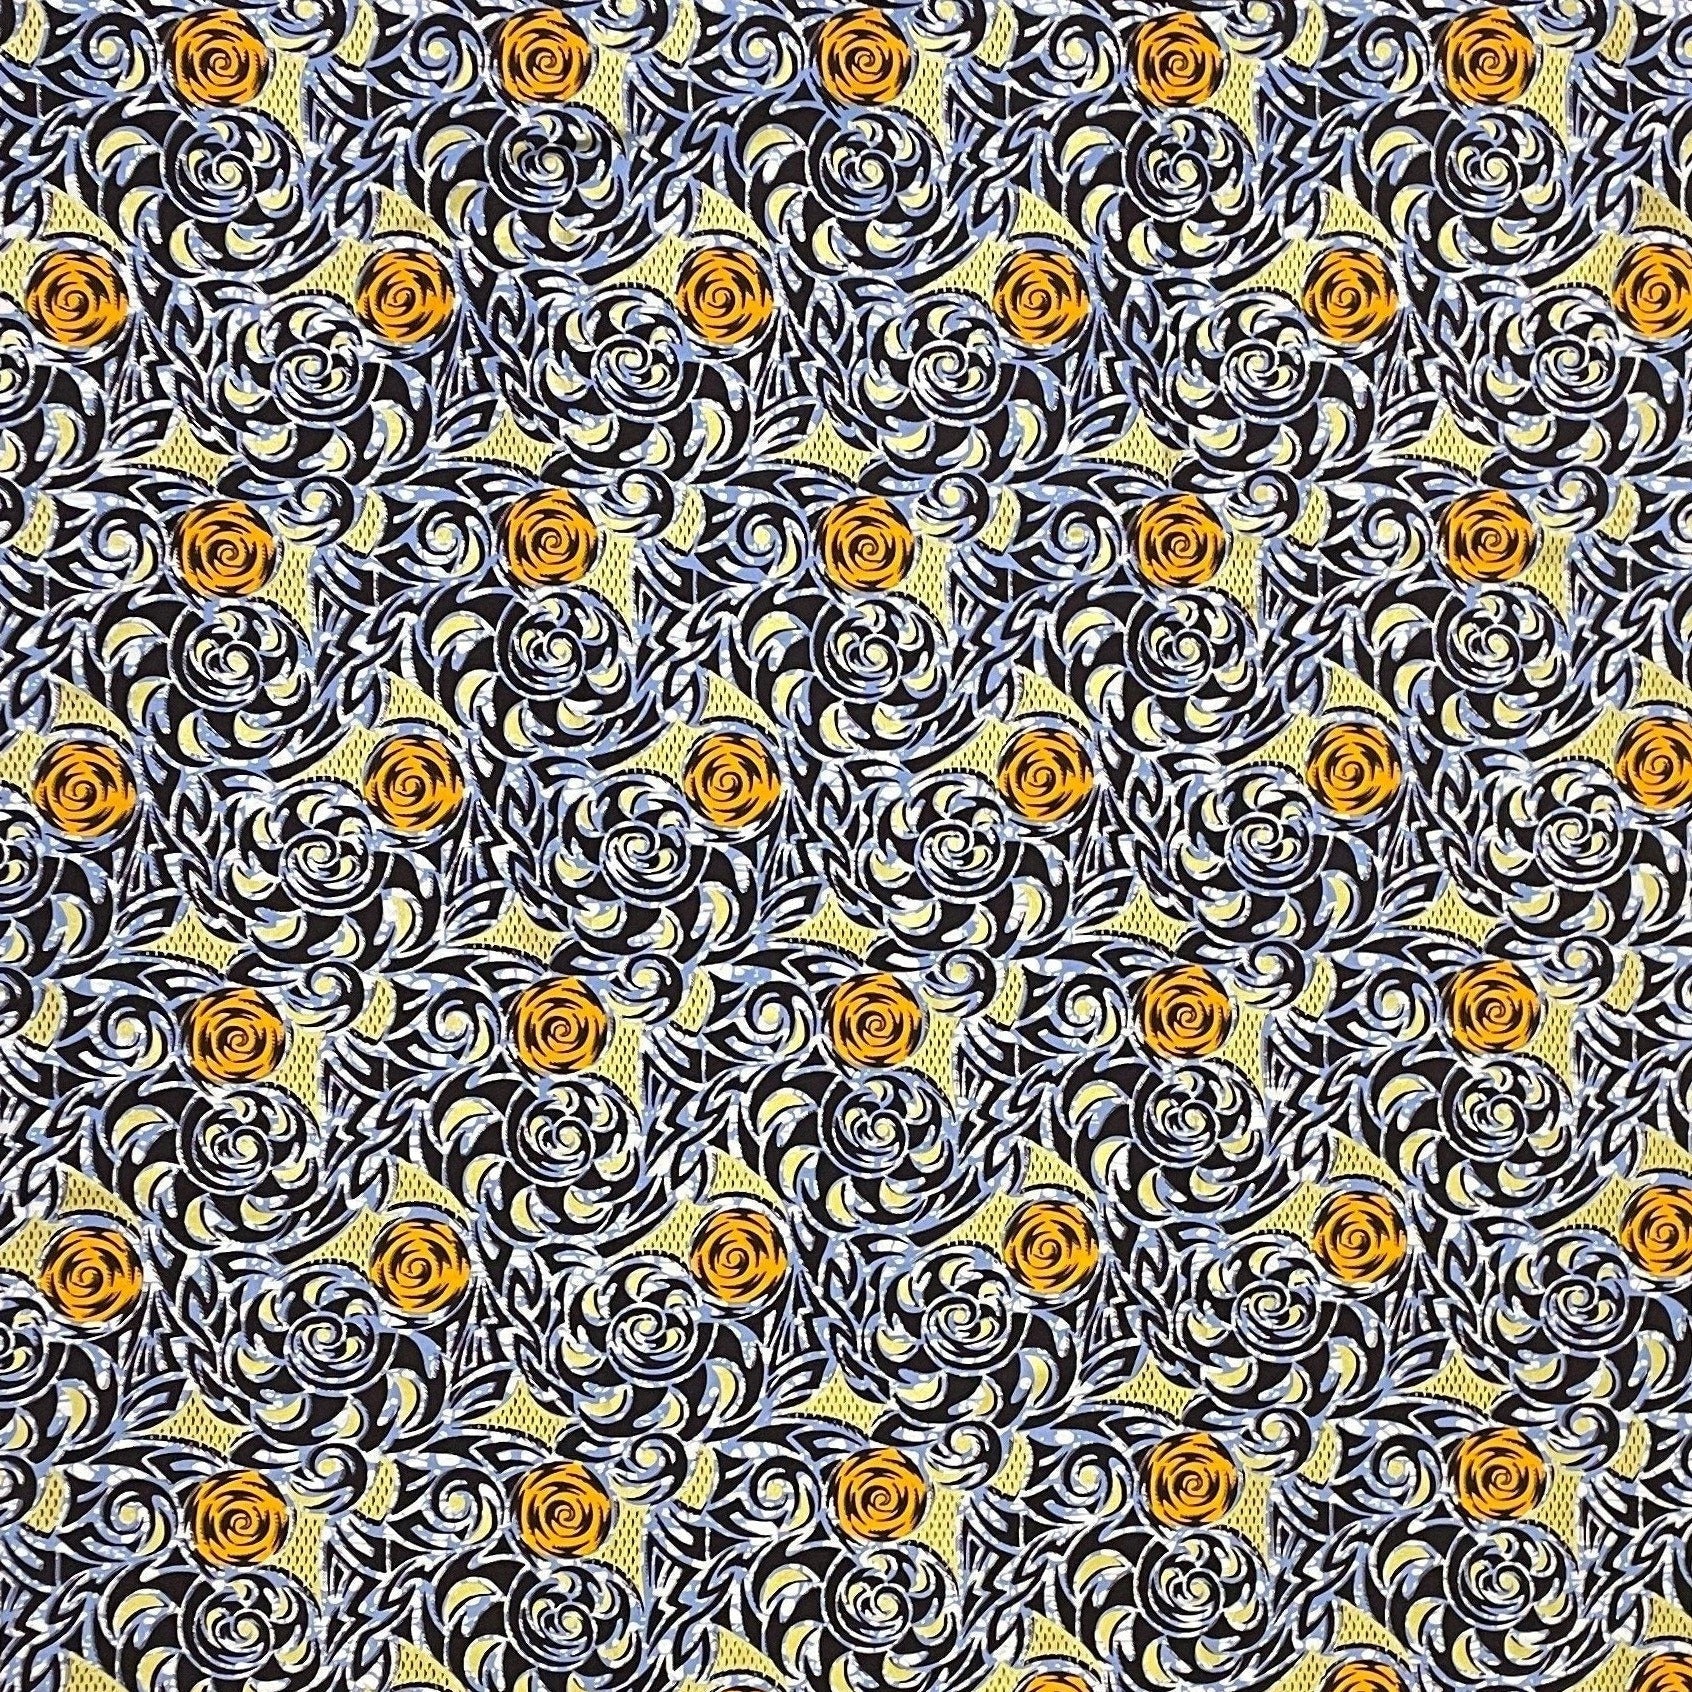 White, Blue & Gold Woodin Ankara Fabric - akwd015 - House of Prints